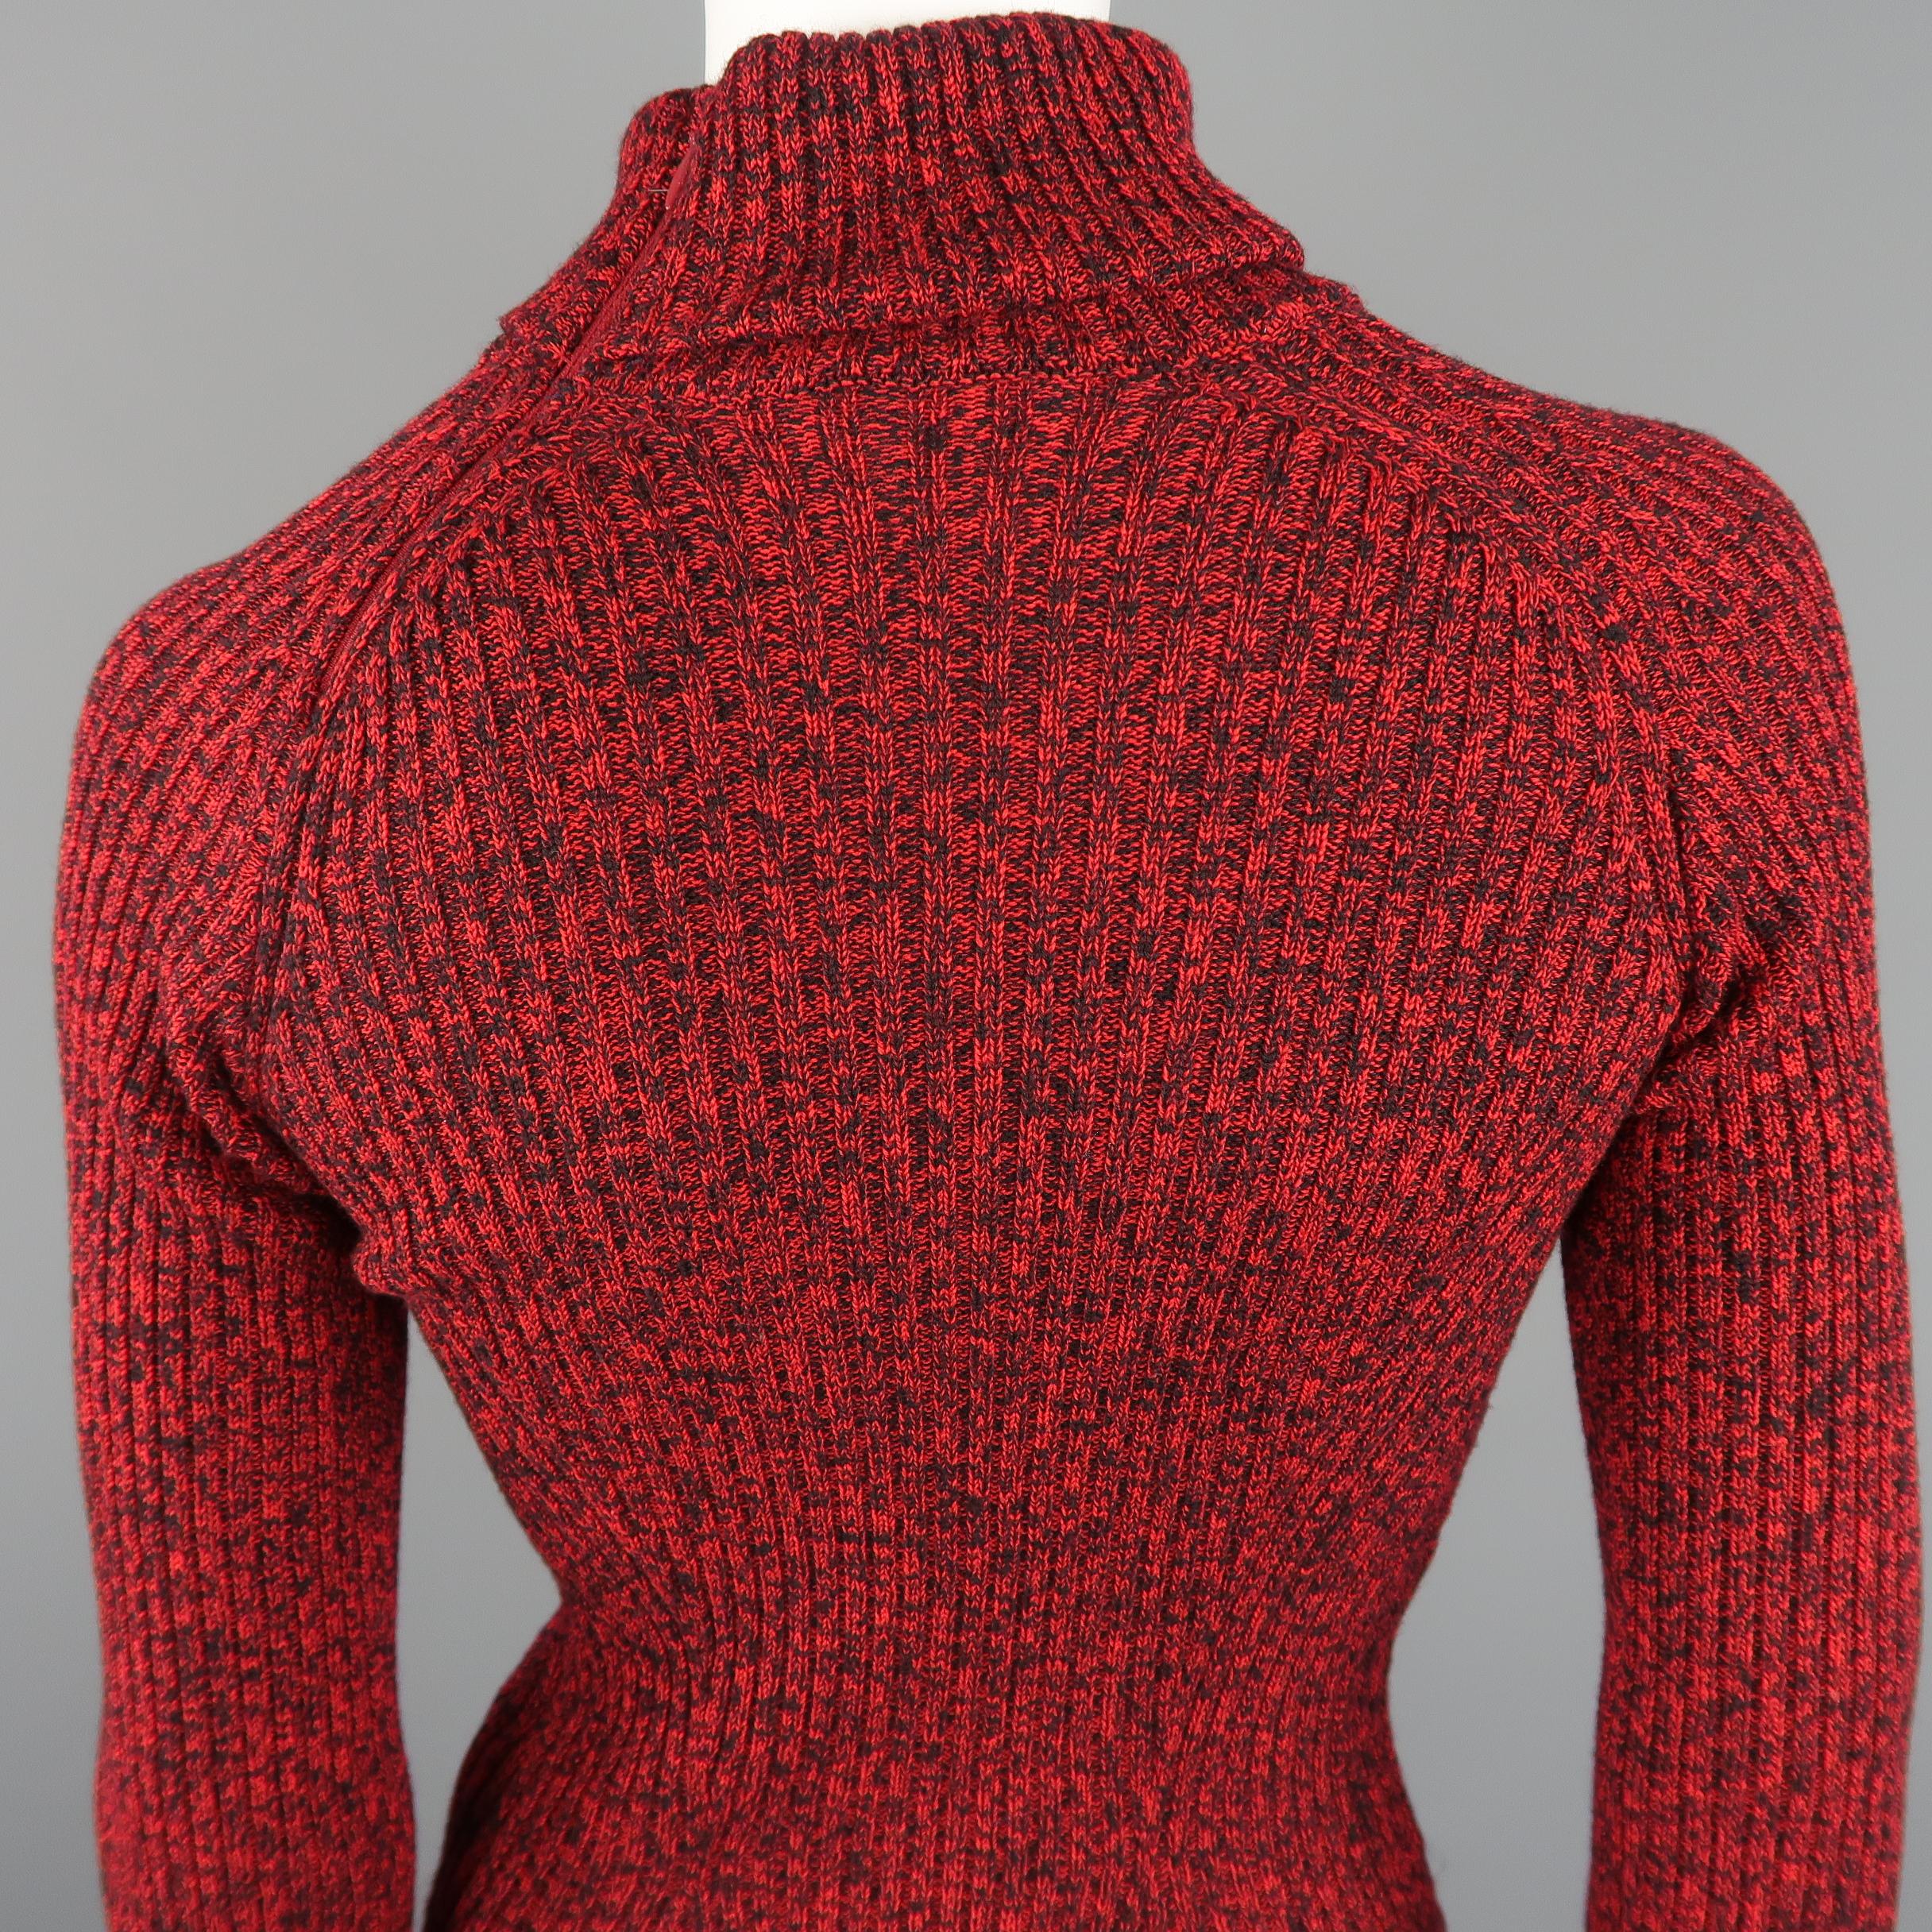 ERDEM Gown - Fall 2015 Runway - Red, Purple, Knit, Taffeta Feather Evening Dress 8